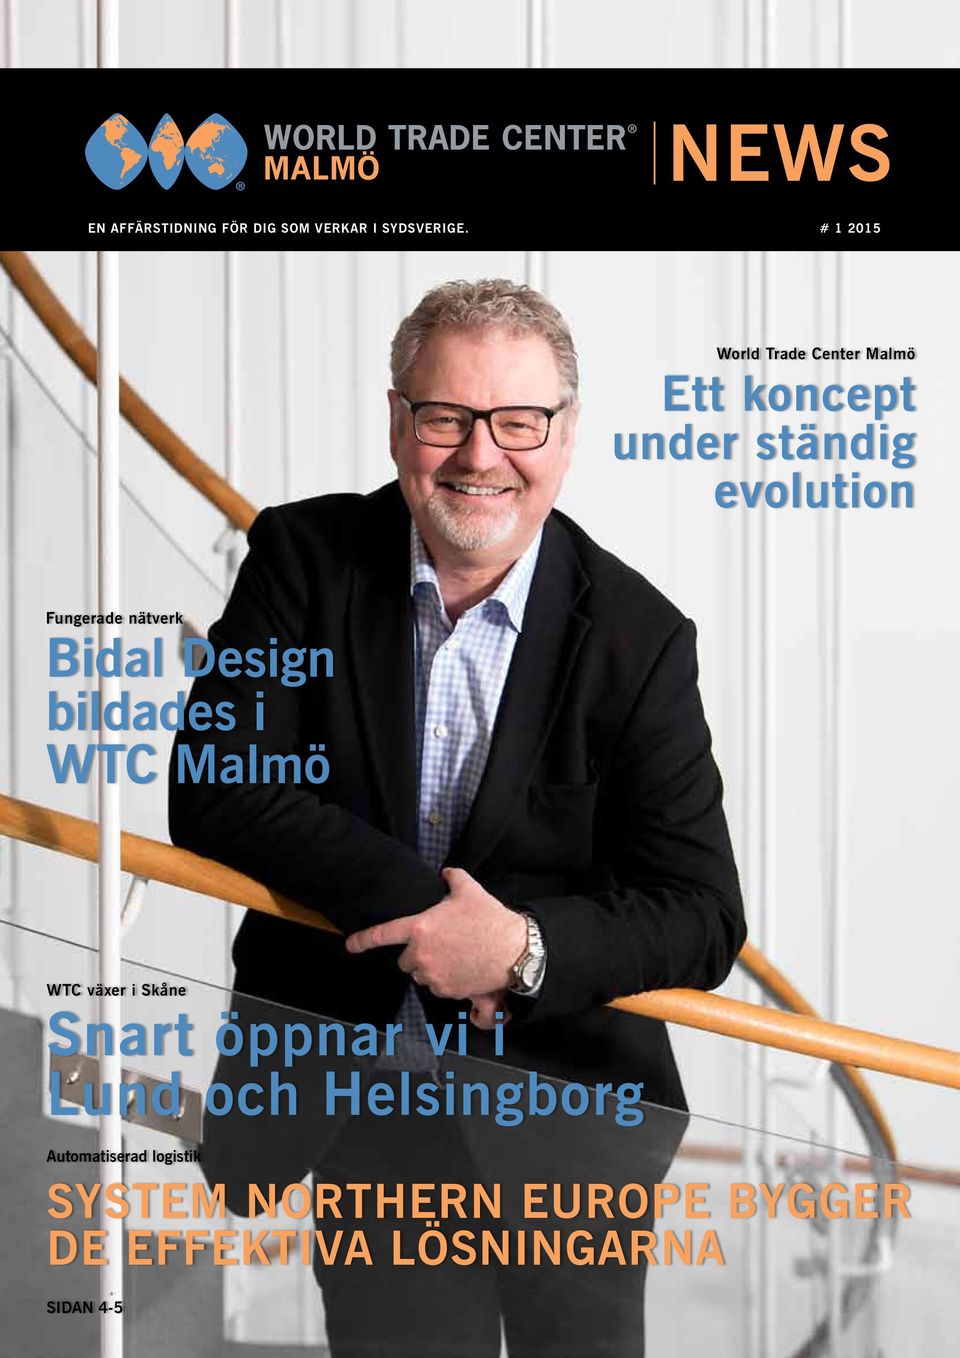 nätverk Bidal Design bildades i WTC Malmö WTC växer i Skåne Snart öppnar vi i